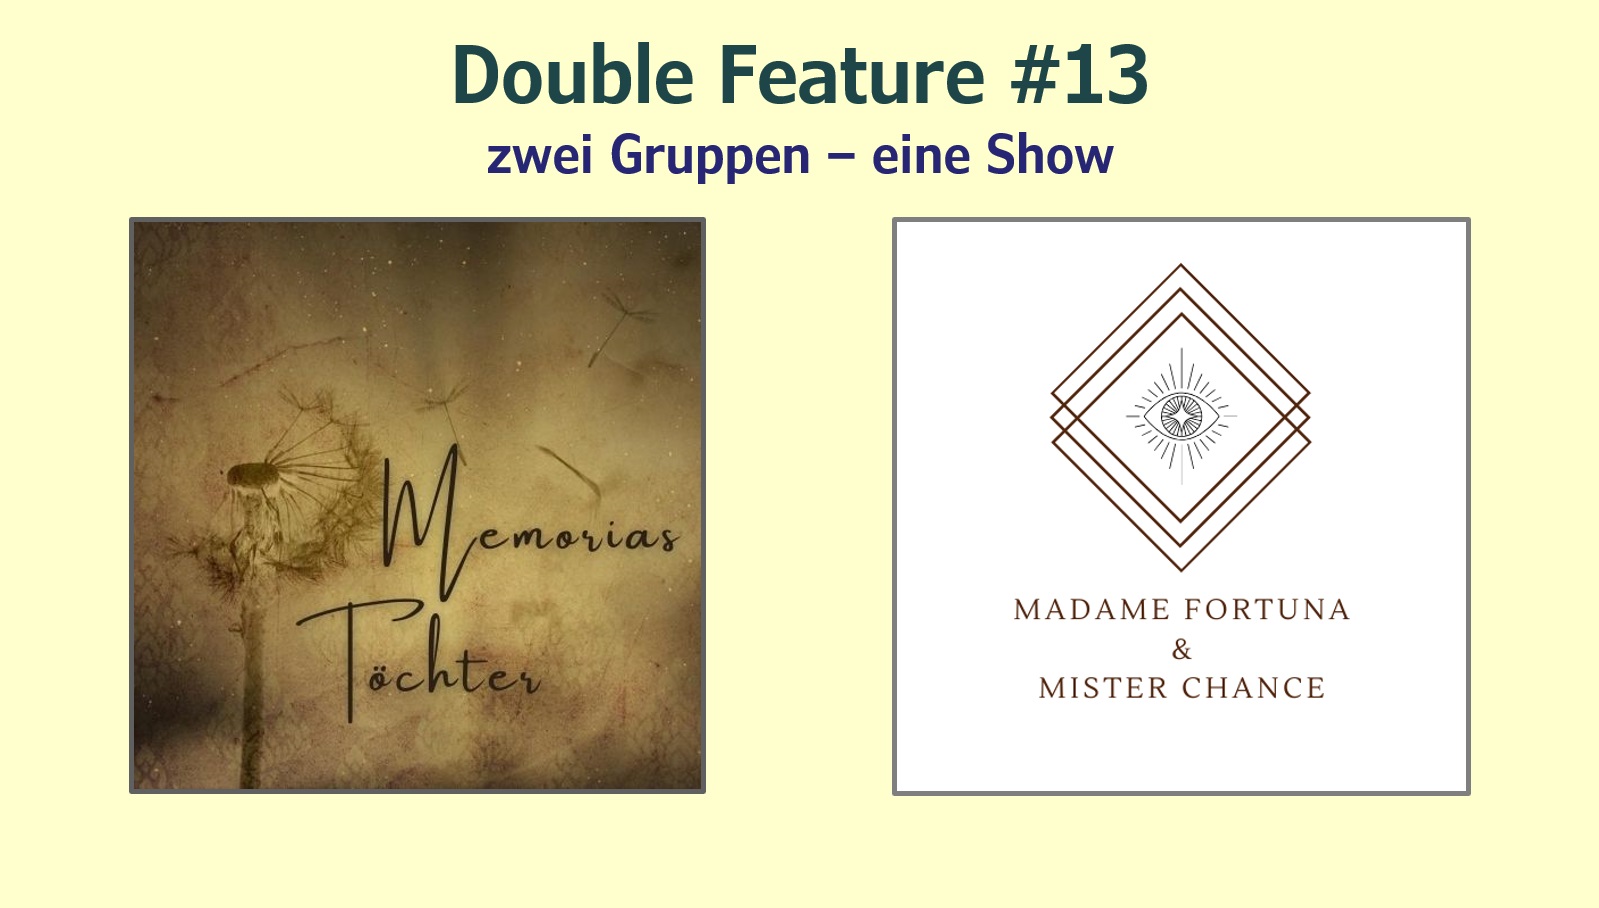 Double Feature #13 - Memorias Töchter + Mdme Fortuna & Mr. Chance